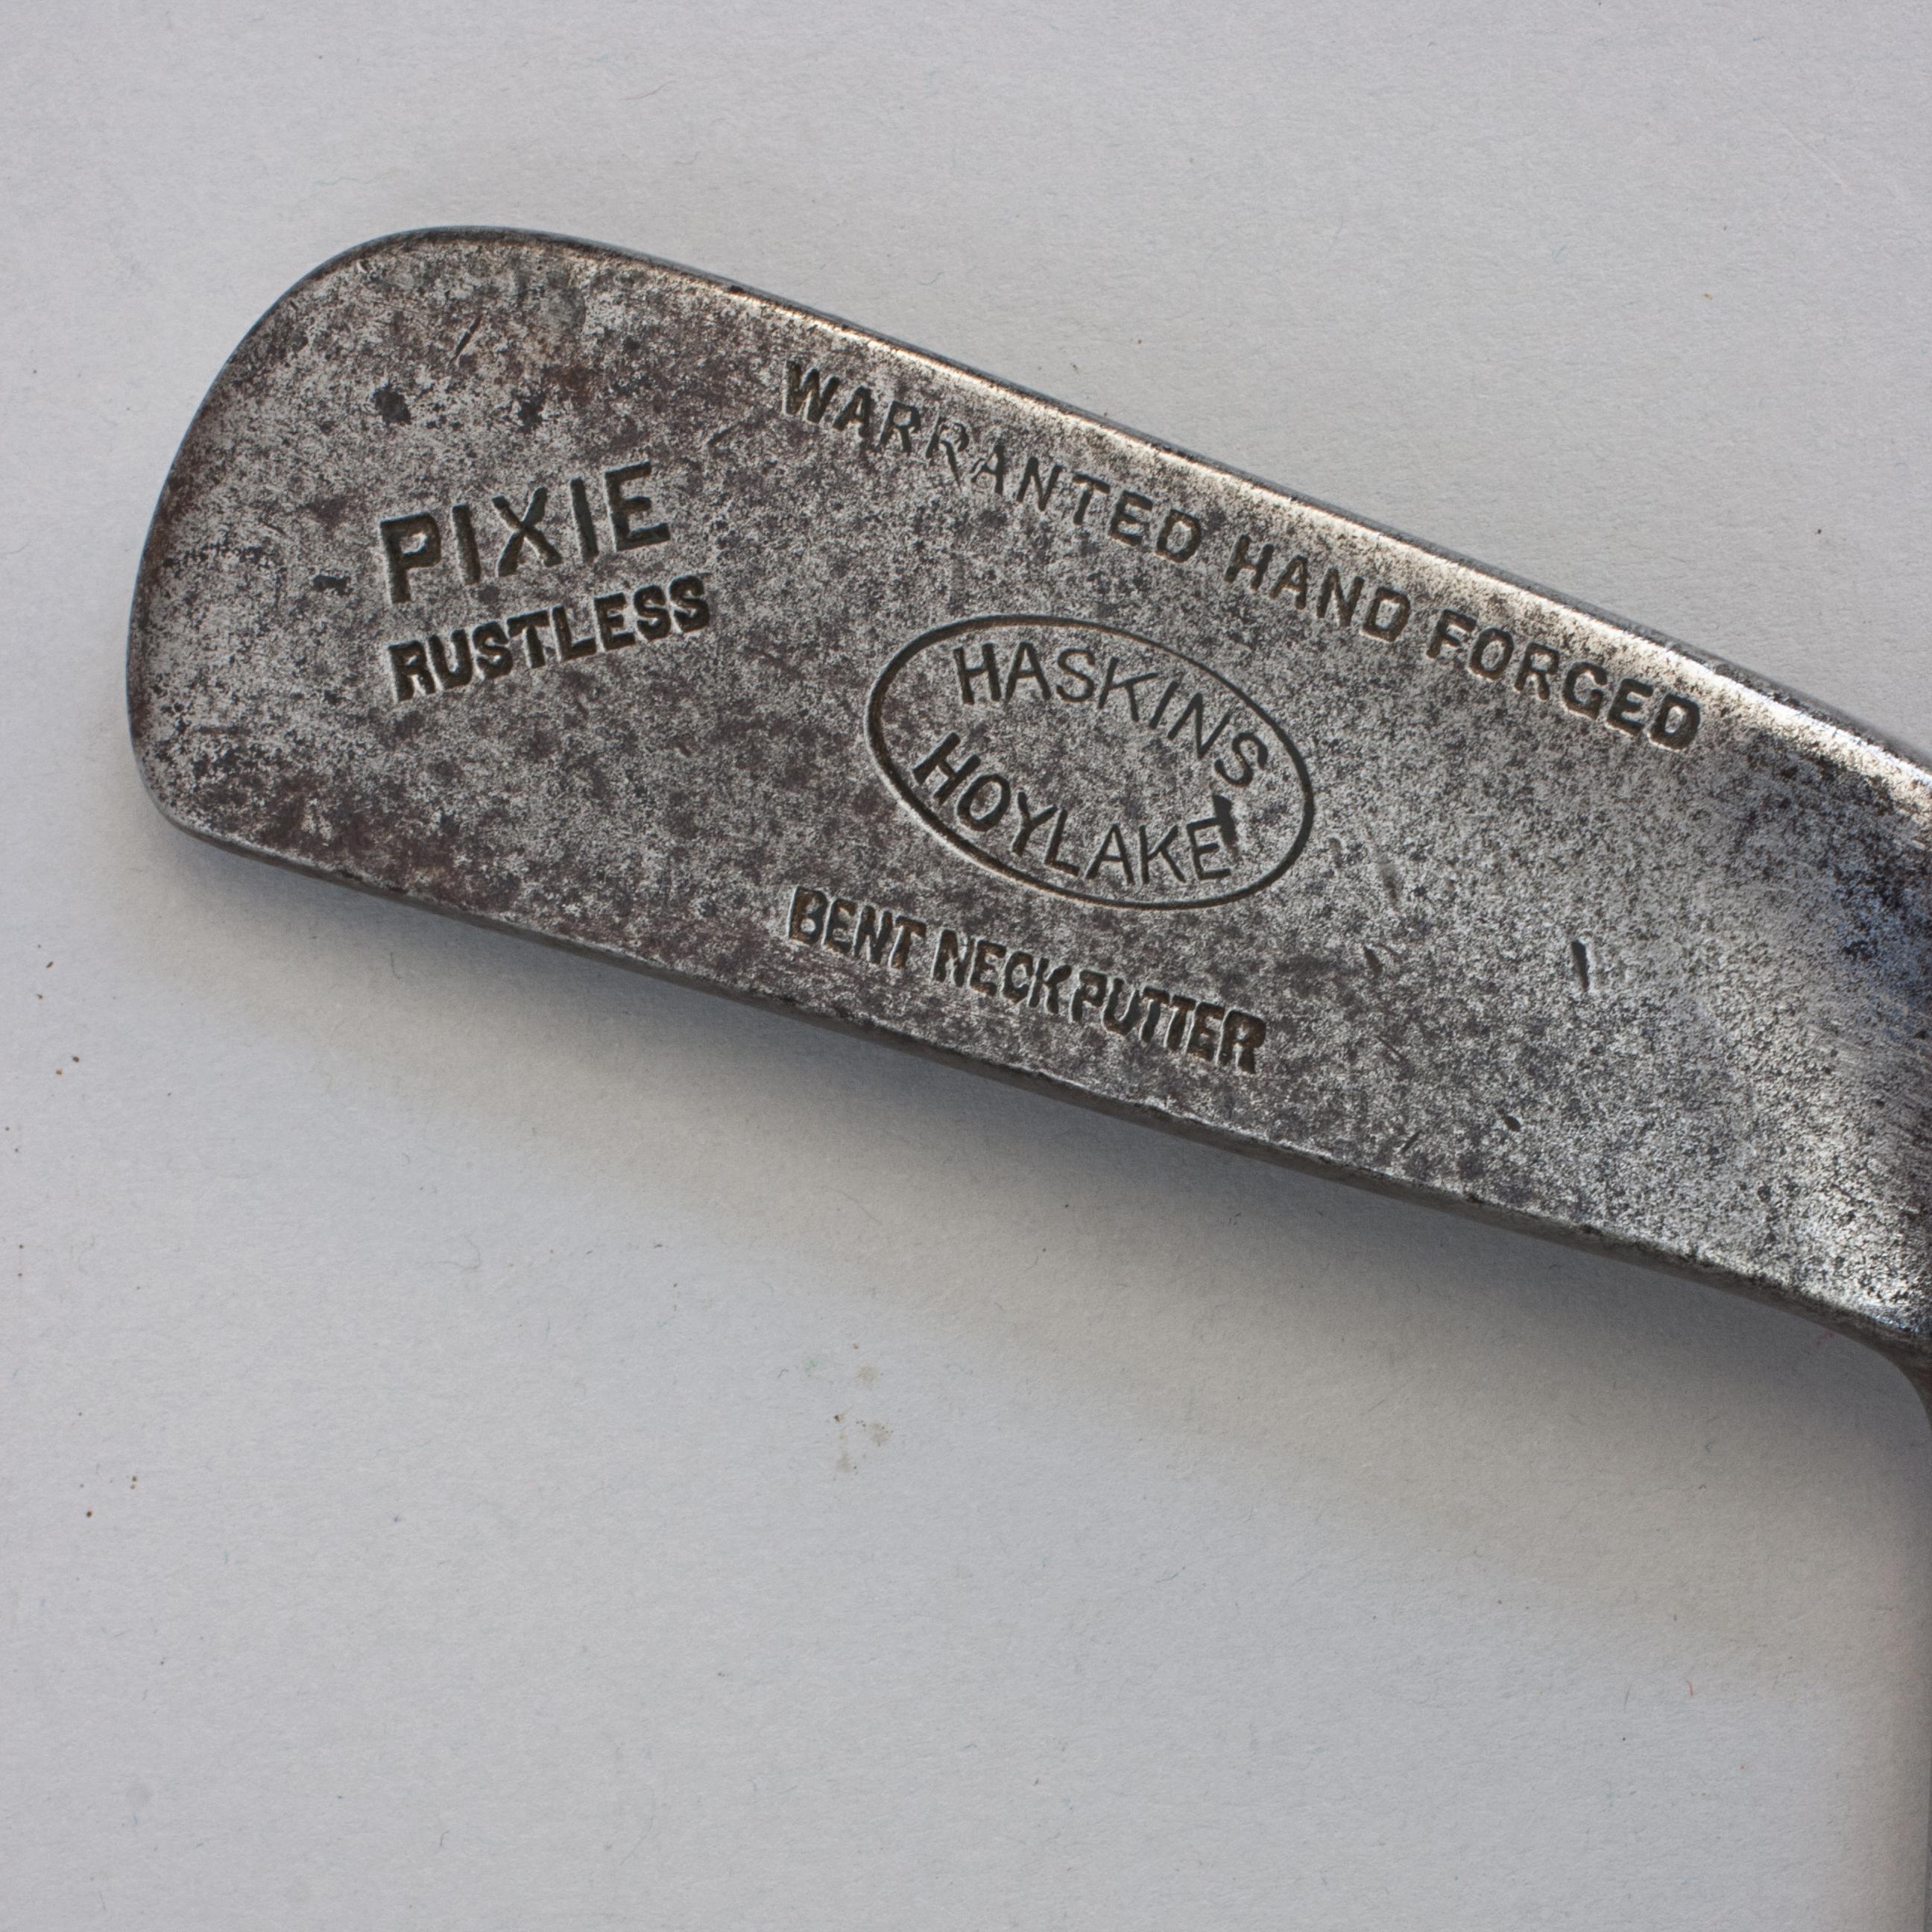 Vintage Bent Neck Putter, Pixie By Haskins Of Hoylake 3